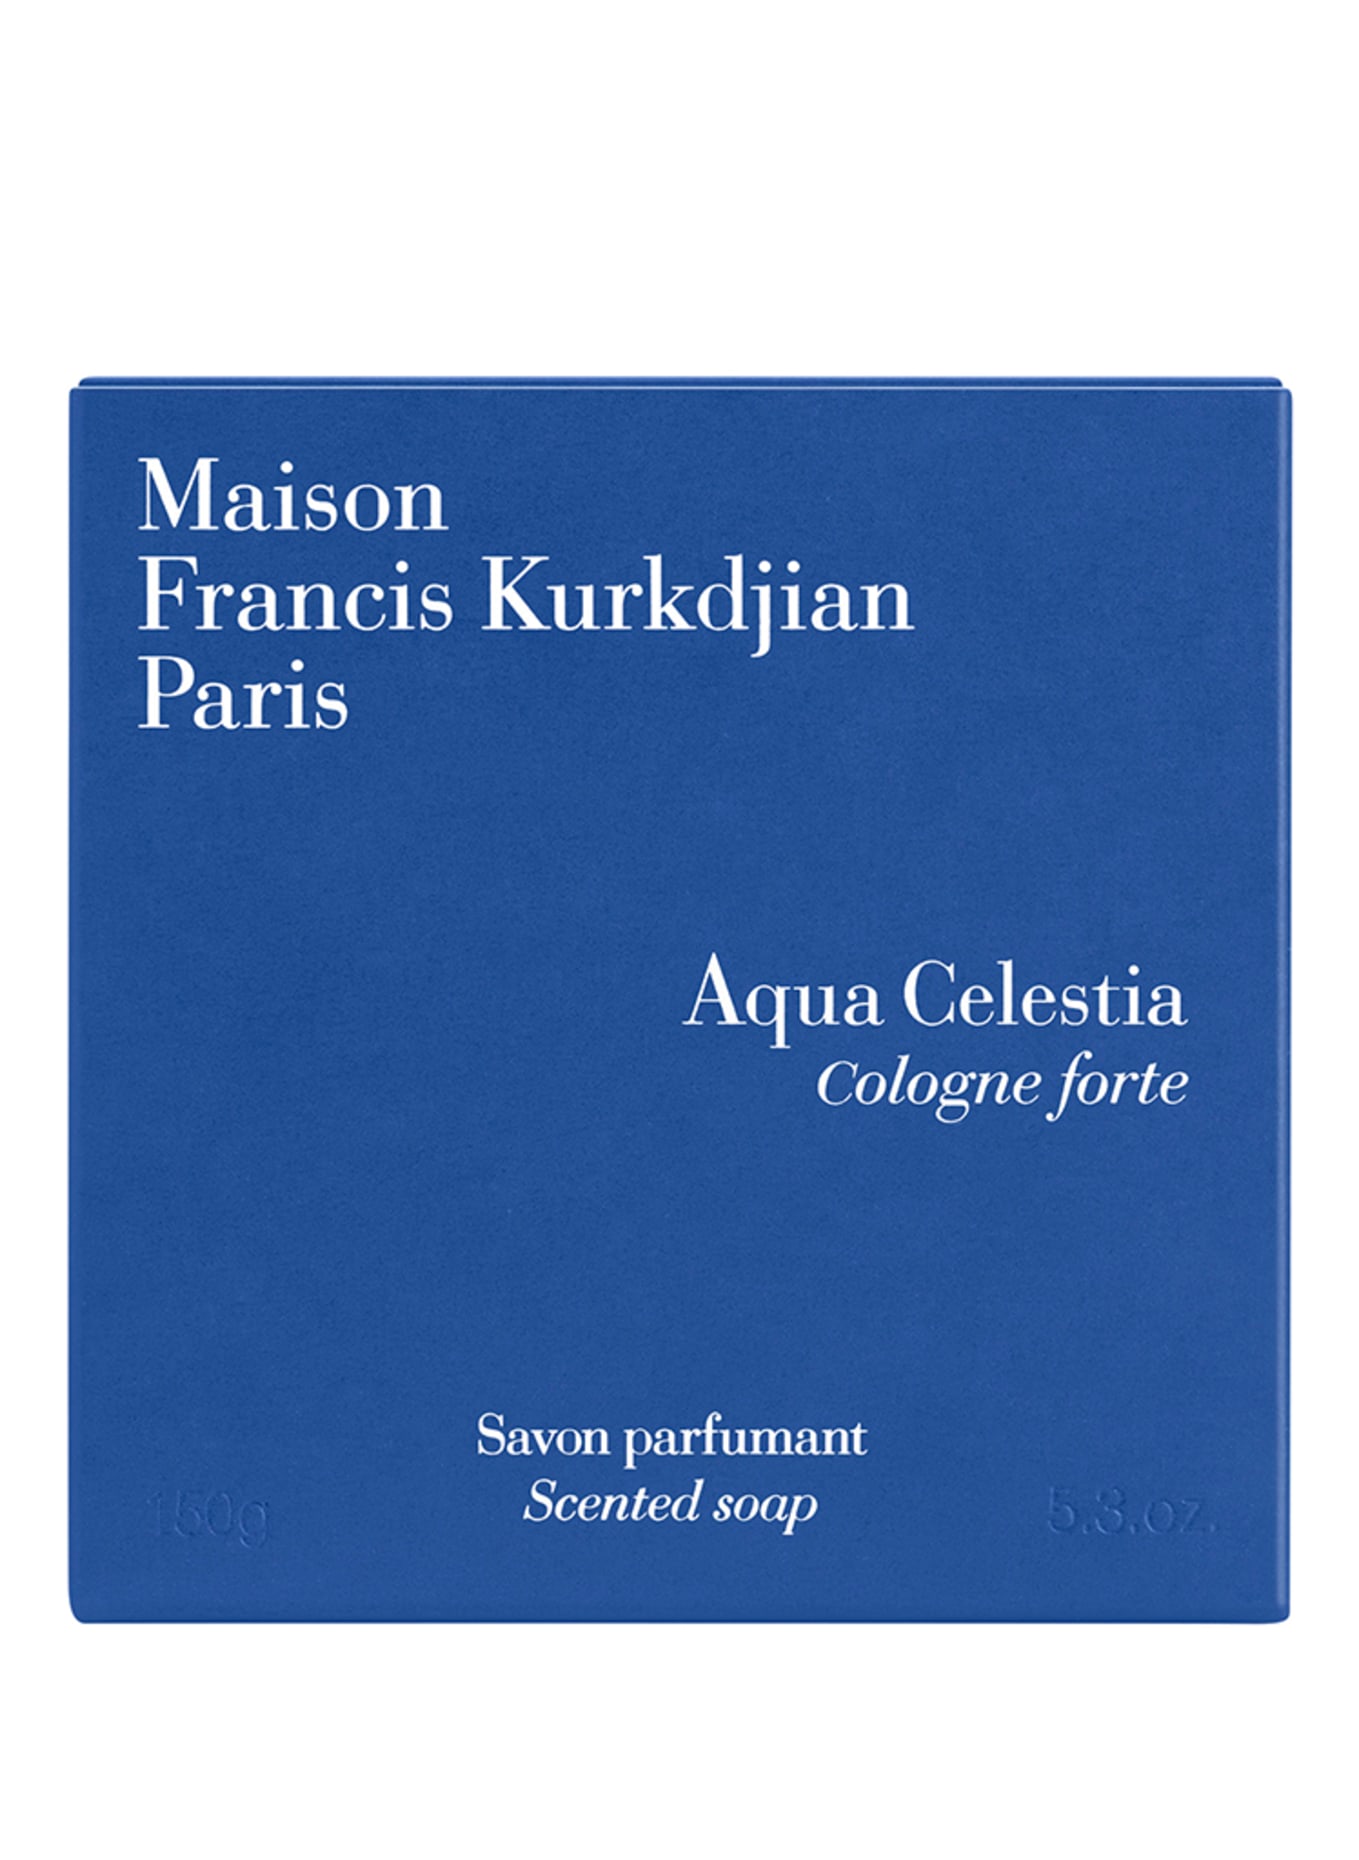 Maison Francis Kurkdjian Paris AQUA CELESTIA COLOGNE FORTE (Obrázek 2)